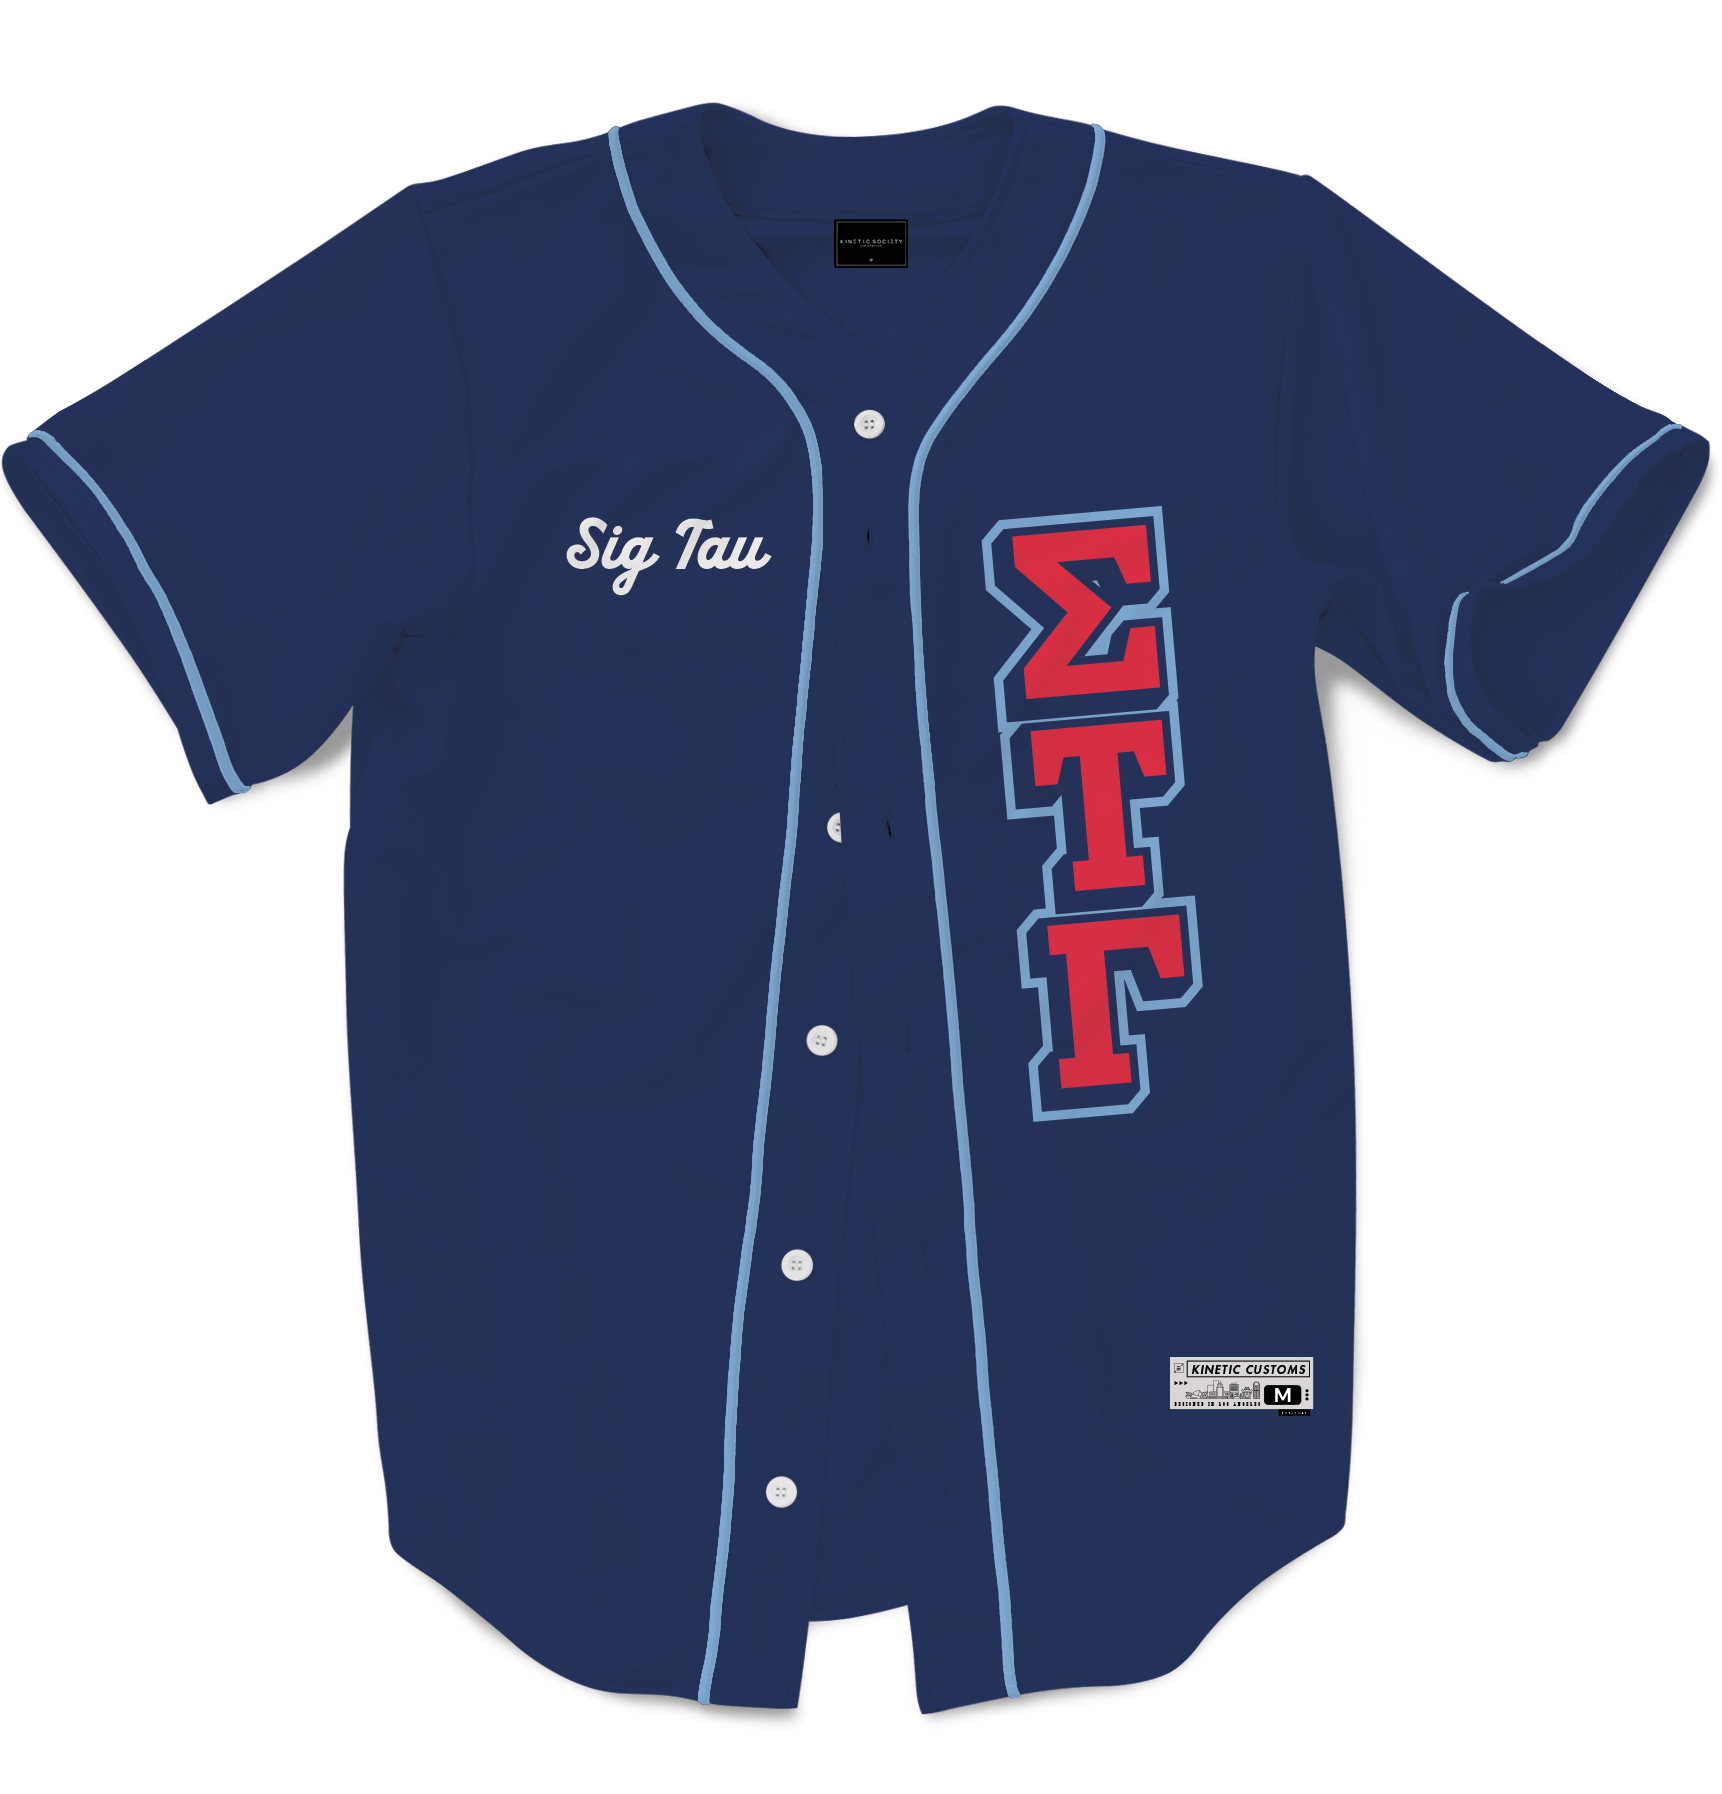 SIGMA TAU GAMMA - The Block Baseball Jersey Premium Baseball Kinetic Society LLC 